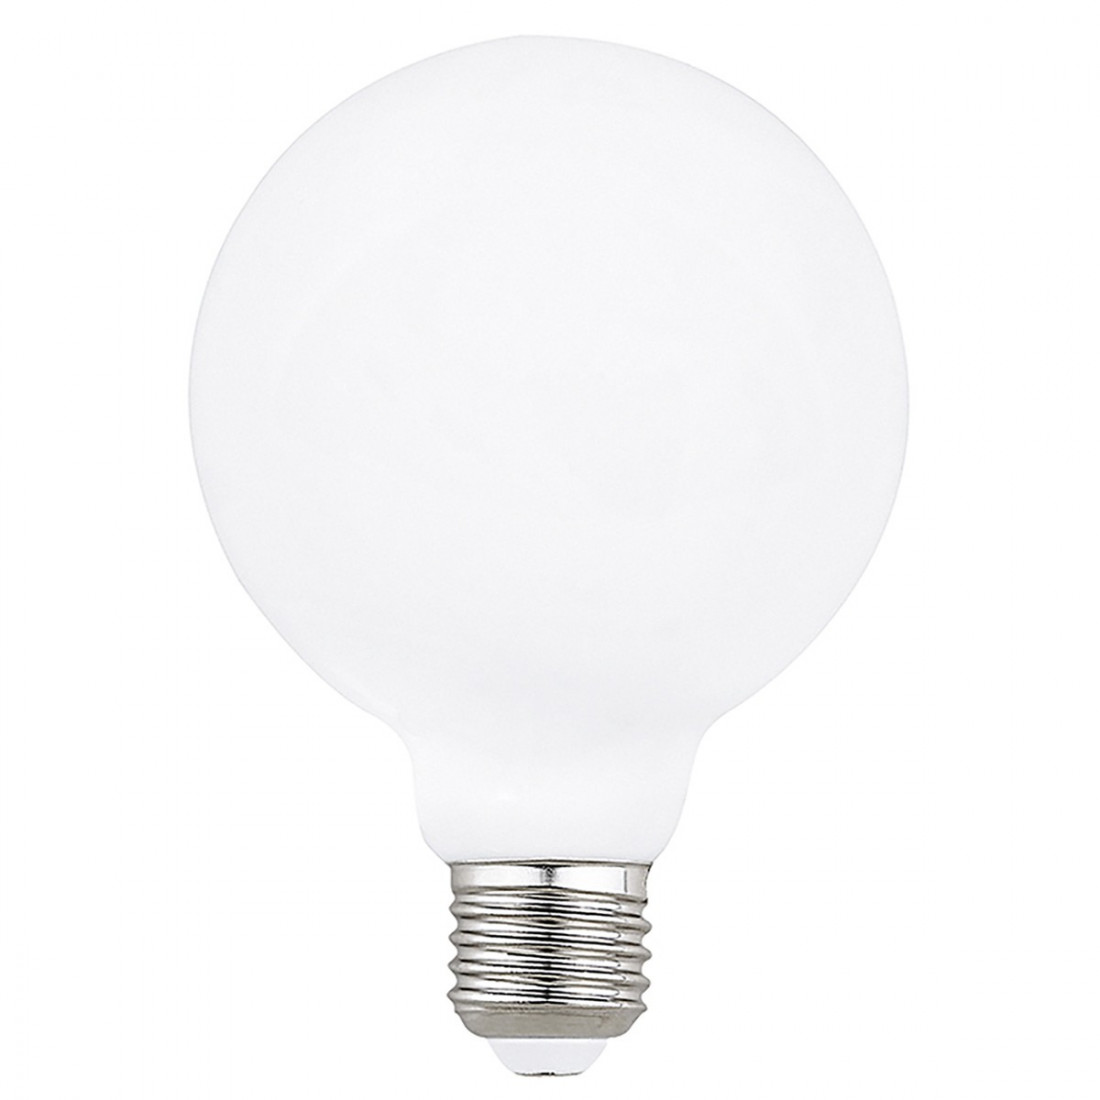 GE-GLA256B 12W E27 Ampoule LED 1370LM 12.5CM 3000 ° K sphère en verre globe blanc